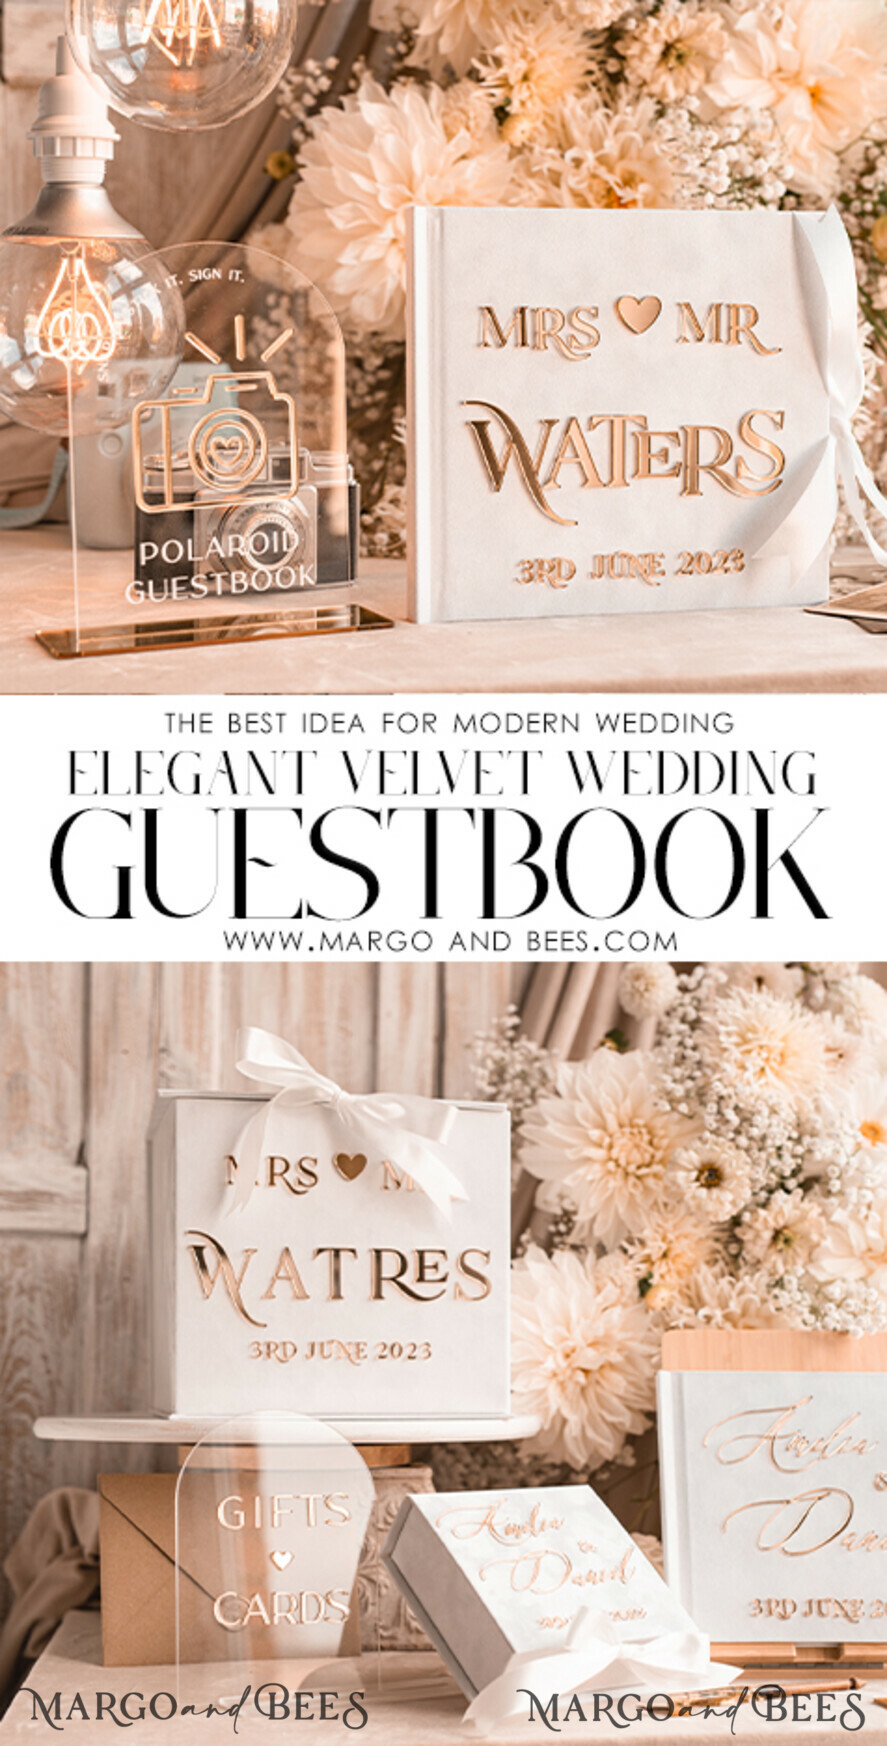 Crystal Heart Ribbon Wedding Guestbook and Pen Set- Custom Colors